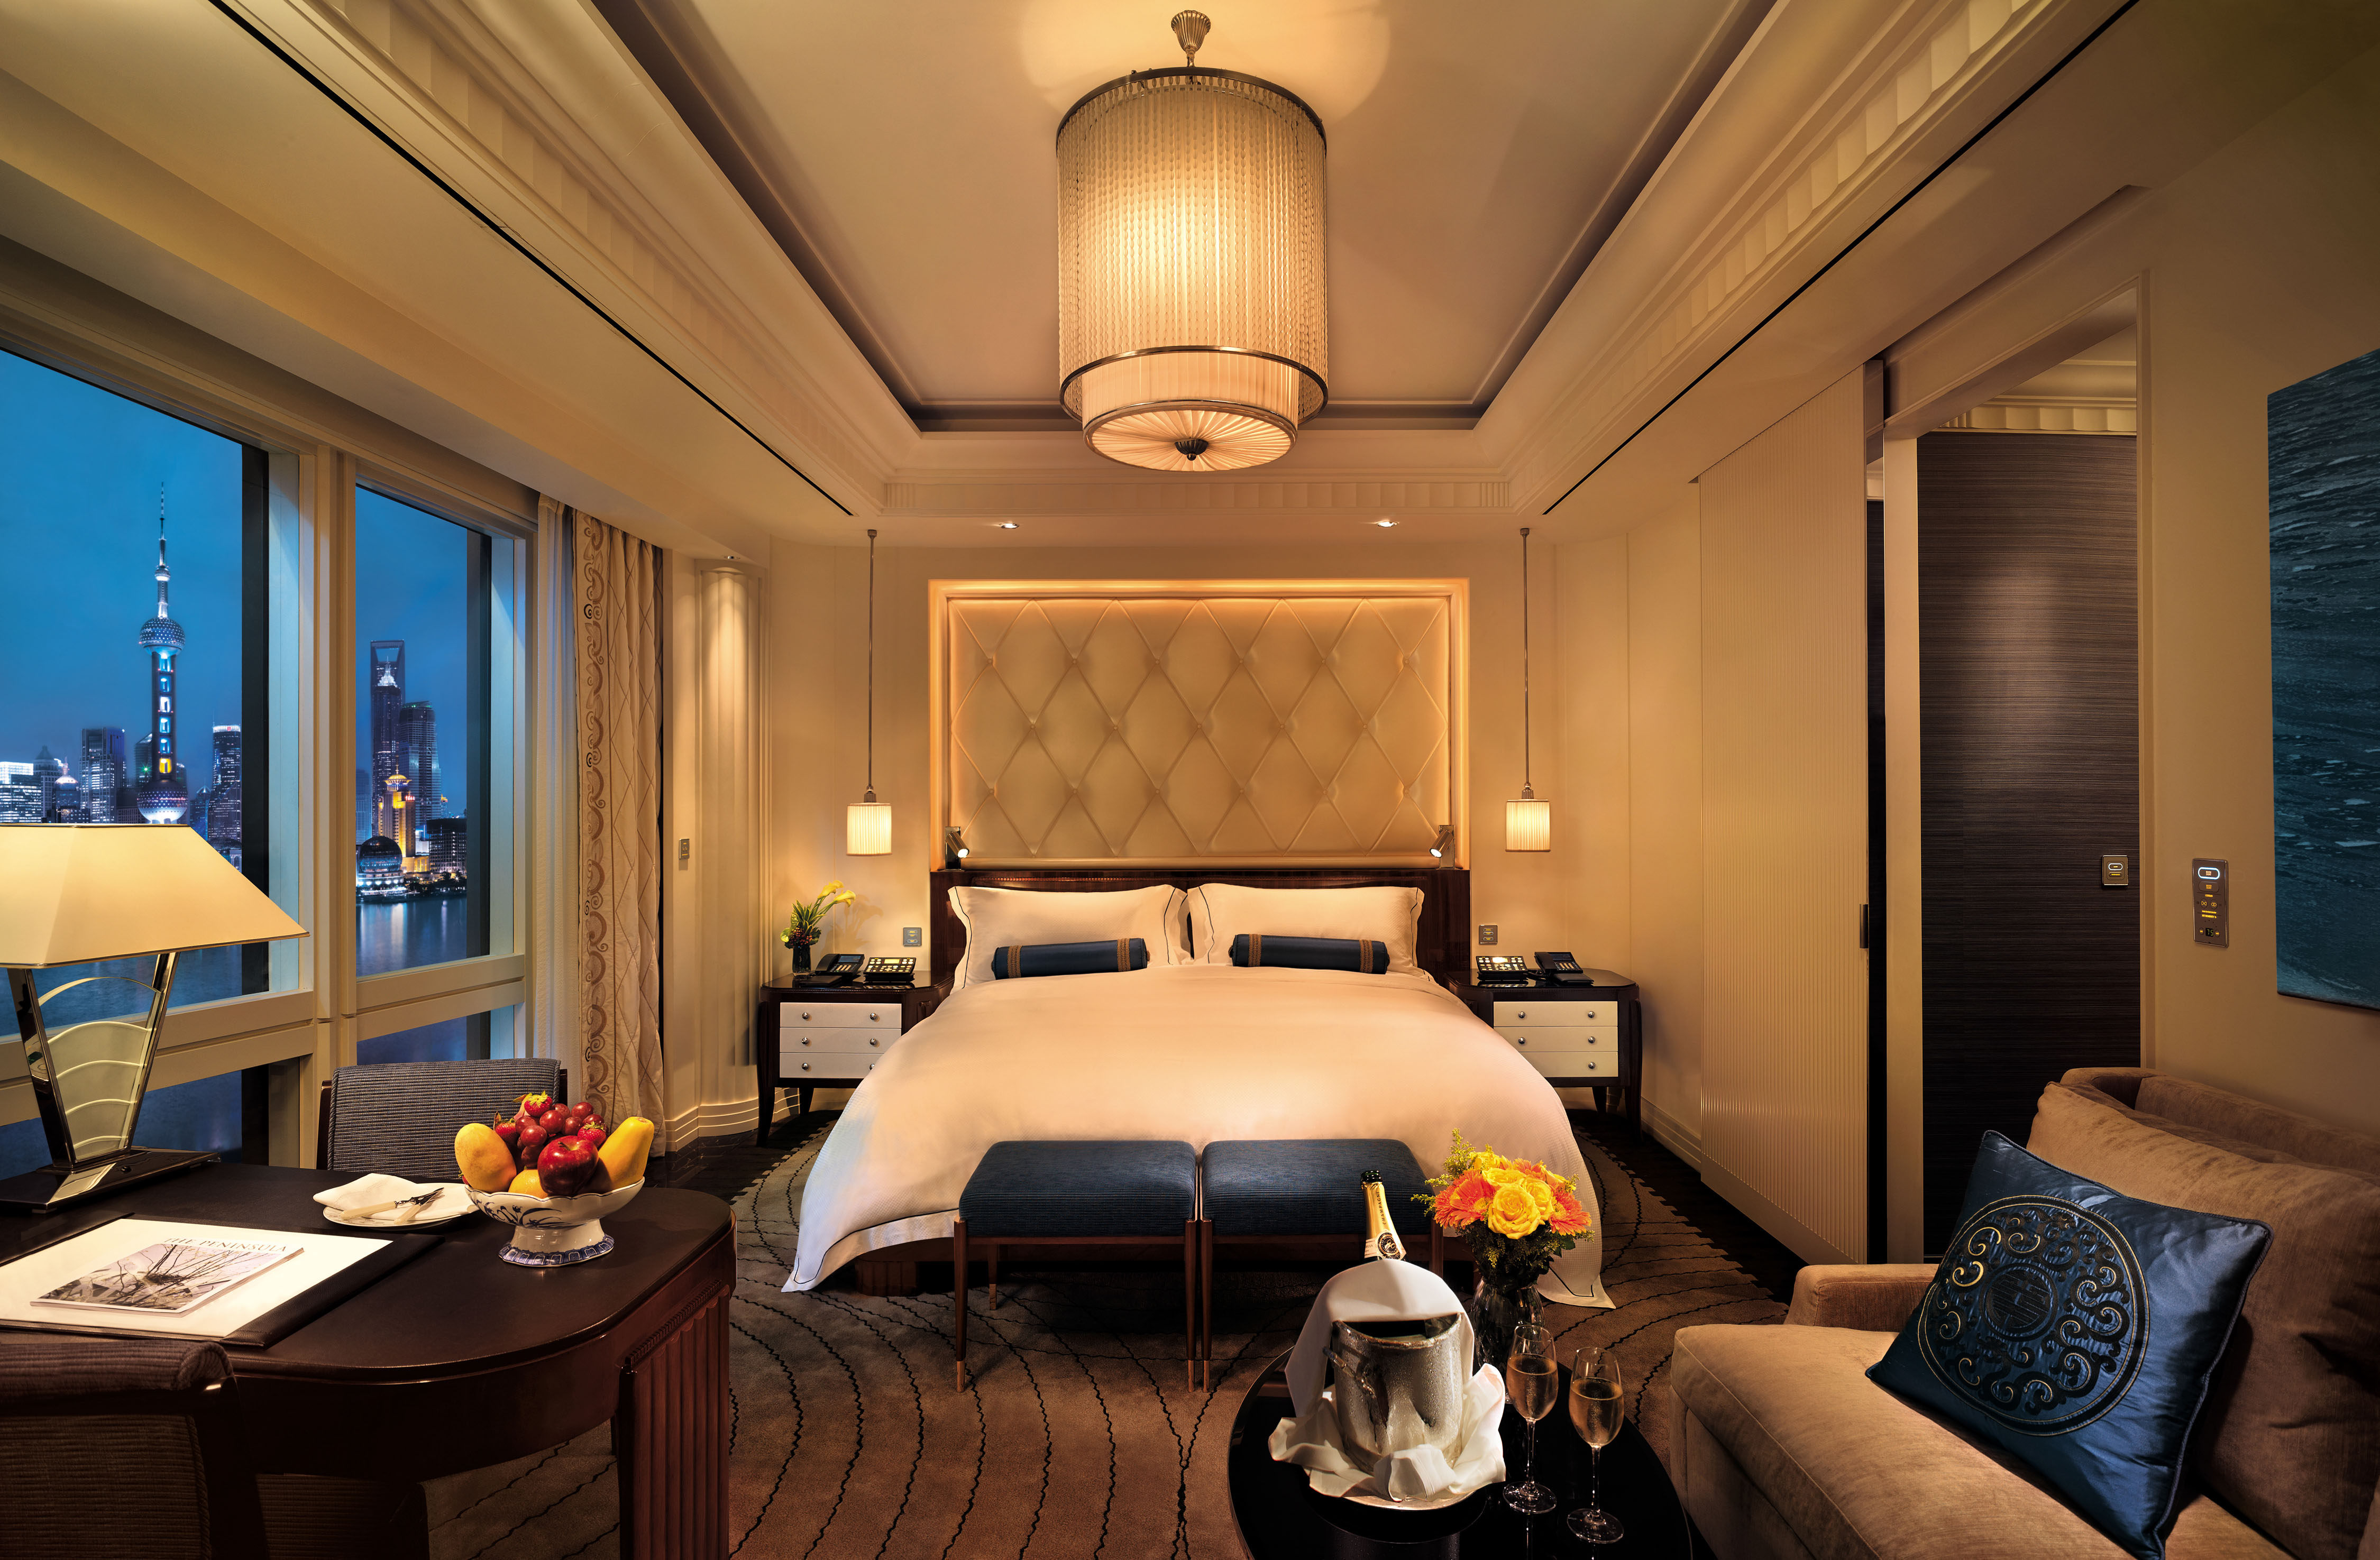 3d Rendering Beautiful Luxury Bedroom Suite In Hotel With Tv Stock Photo -  Download Image Now - iStock